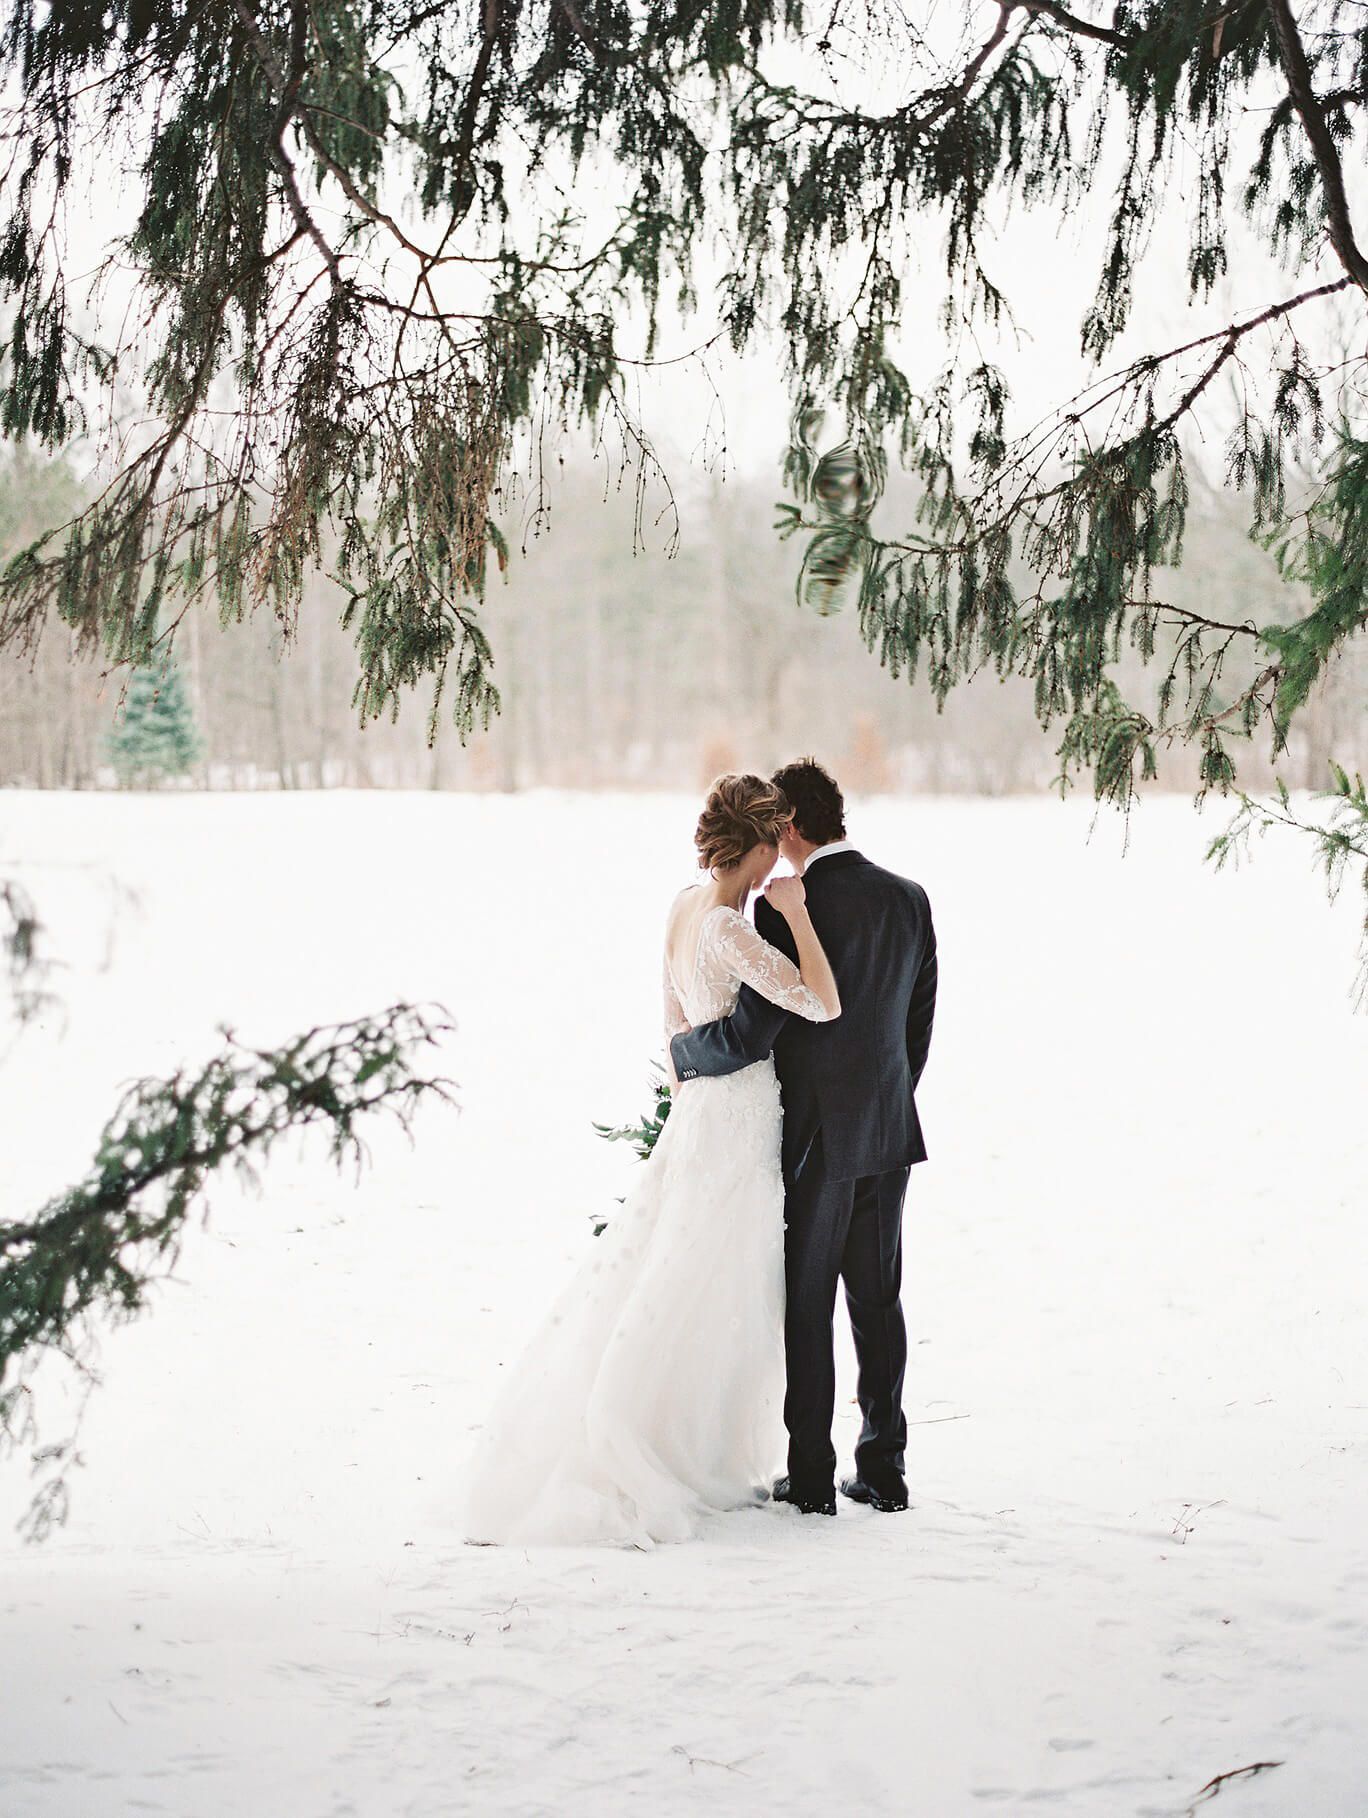 15 wedding Winter shooting ideas